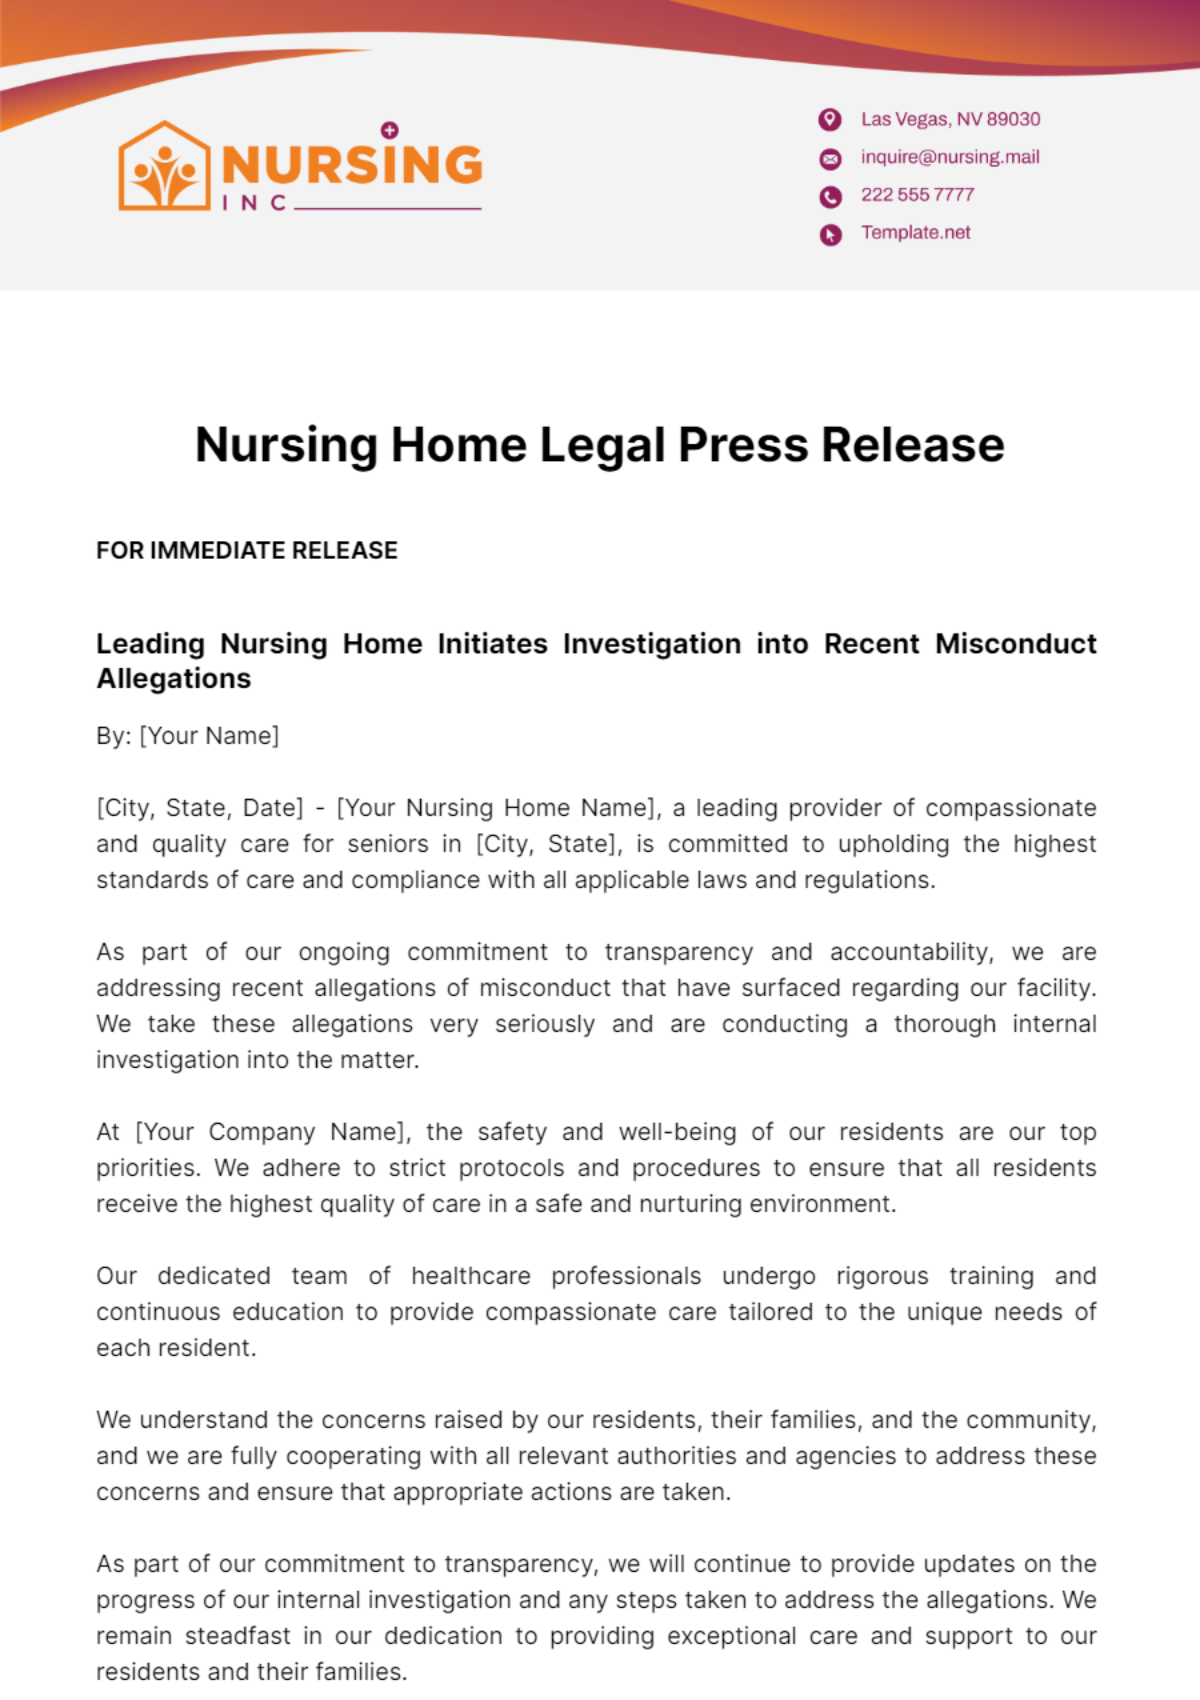 Nursing Home Legal Press Release Template